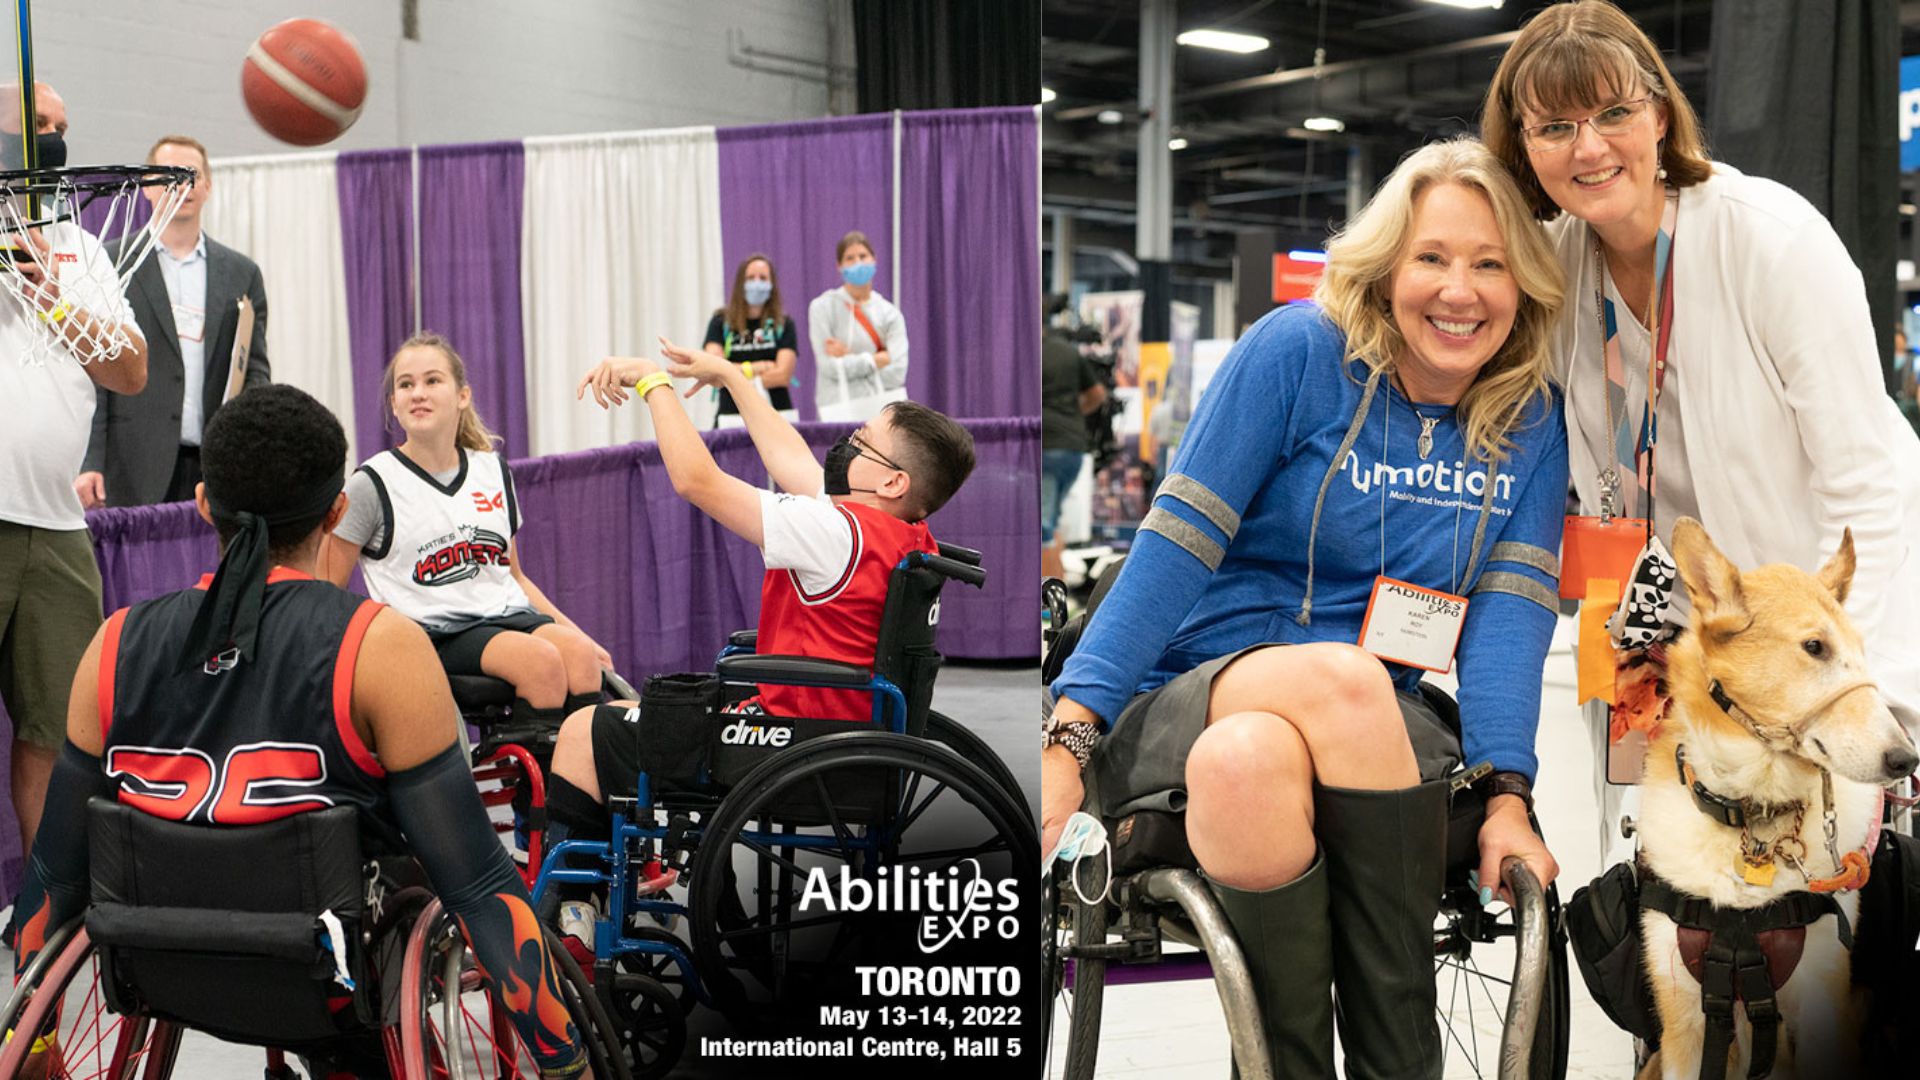 Abilities Expo Toronto 2022 Propel Physiotherapy exhibitors